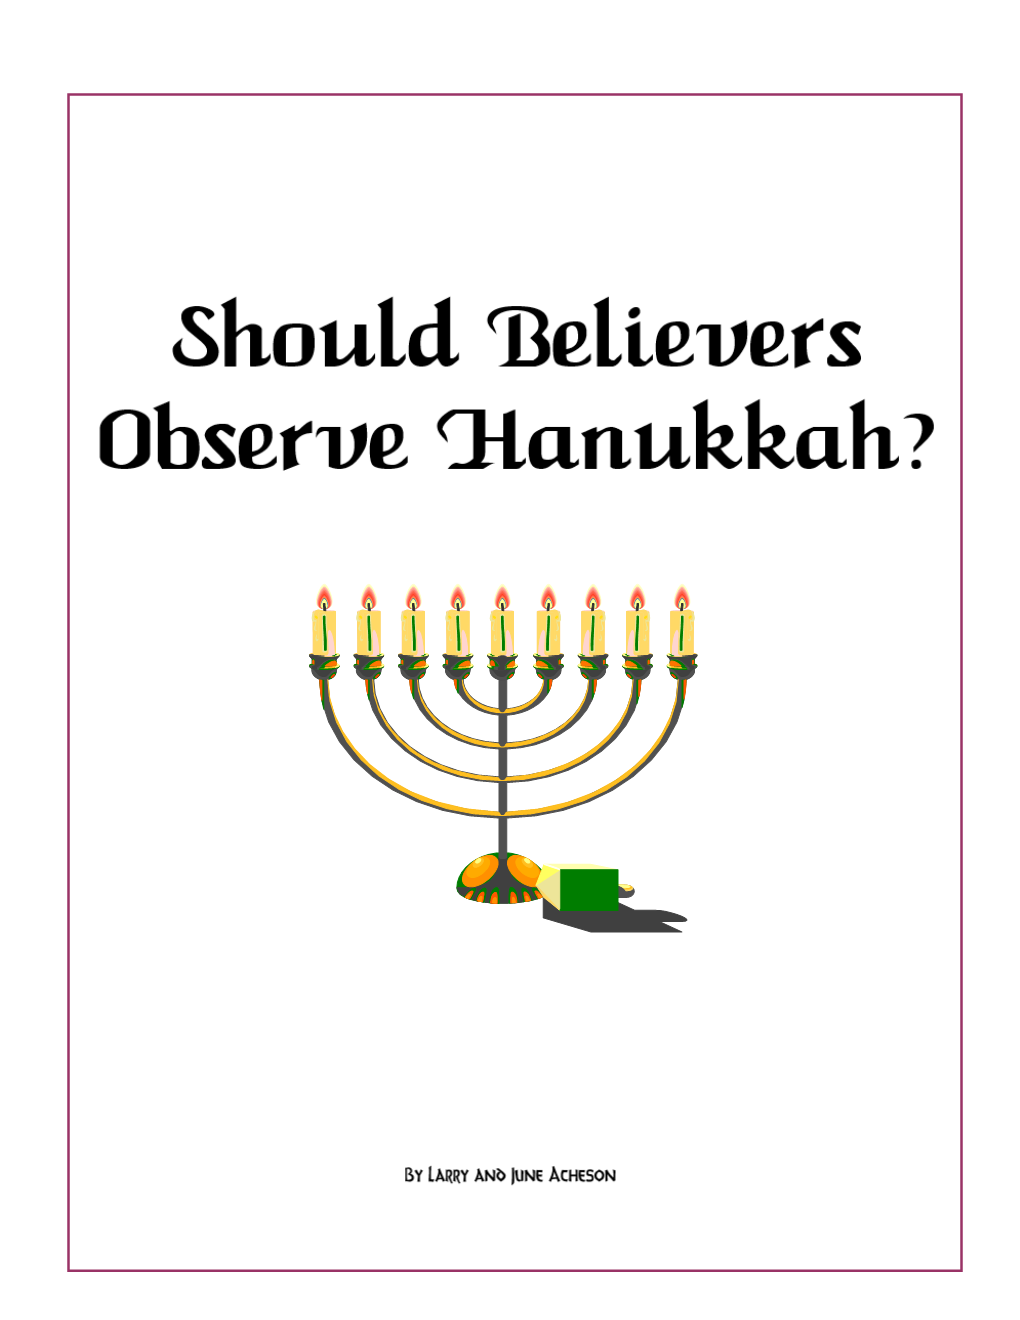 Should Believers Observe Hanukkah?